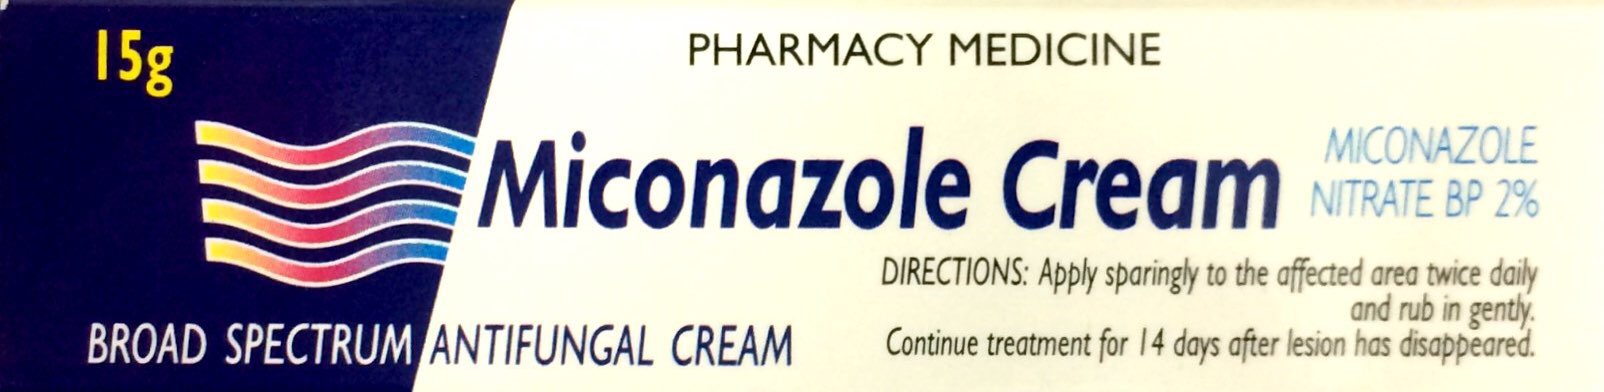 Miconazole Cream Miconazole Nitrate BP 2% 15g Pharmacy Medicine - Pakuranga Pharmacy